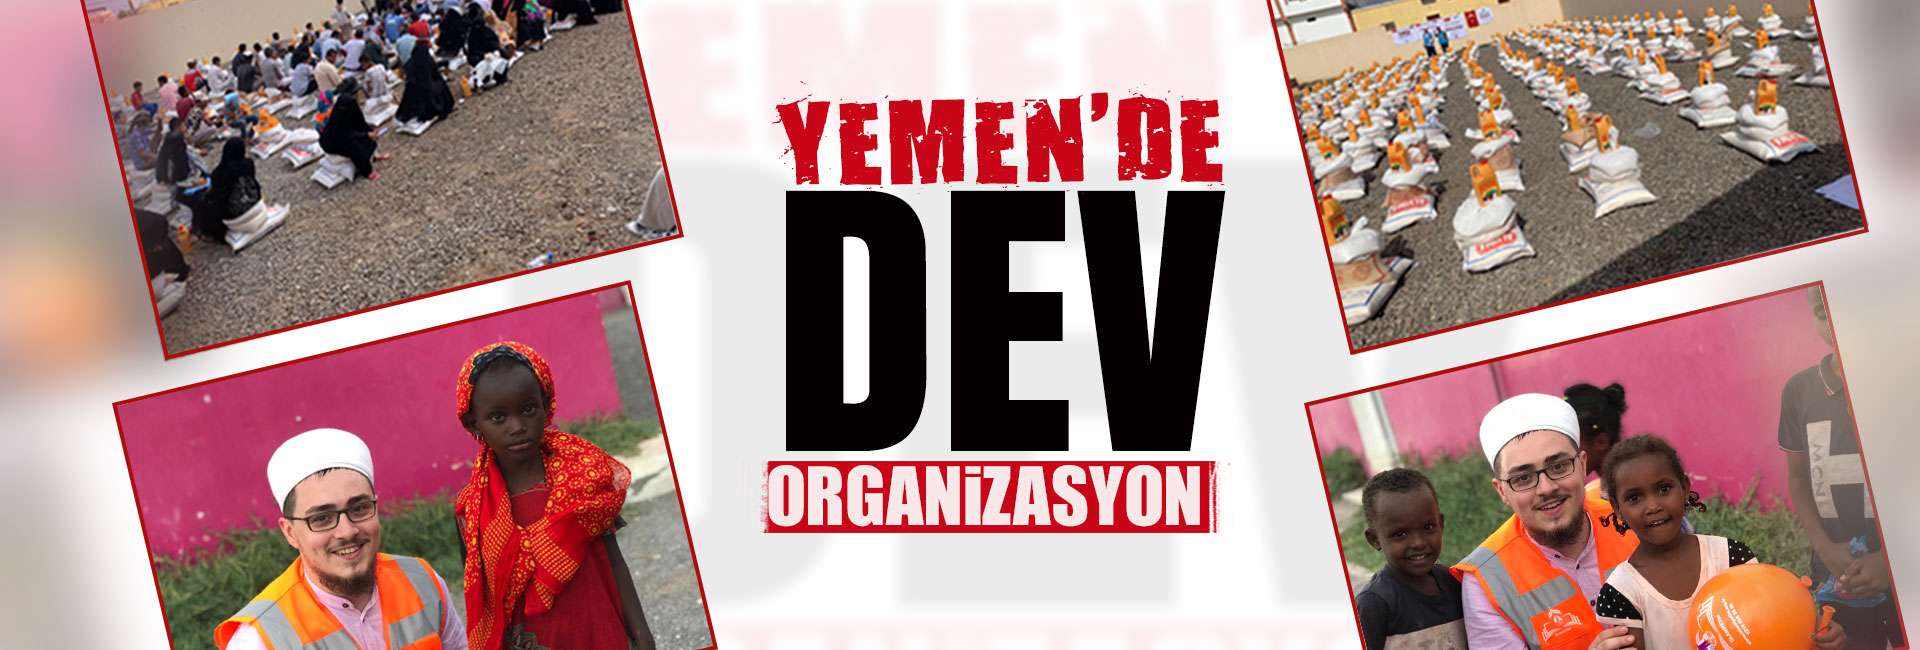 Yemen'de Dev Organizasyon 